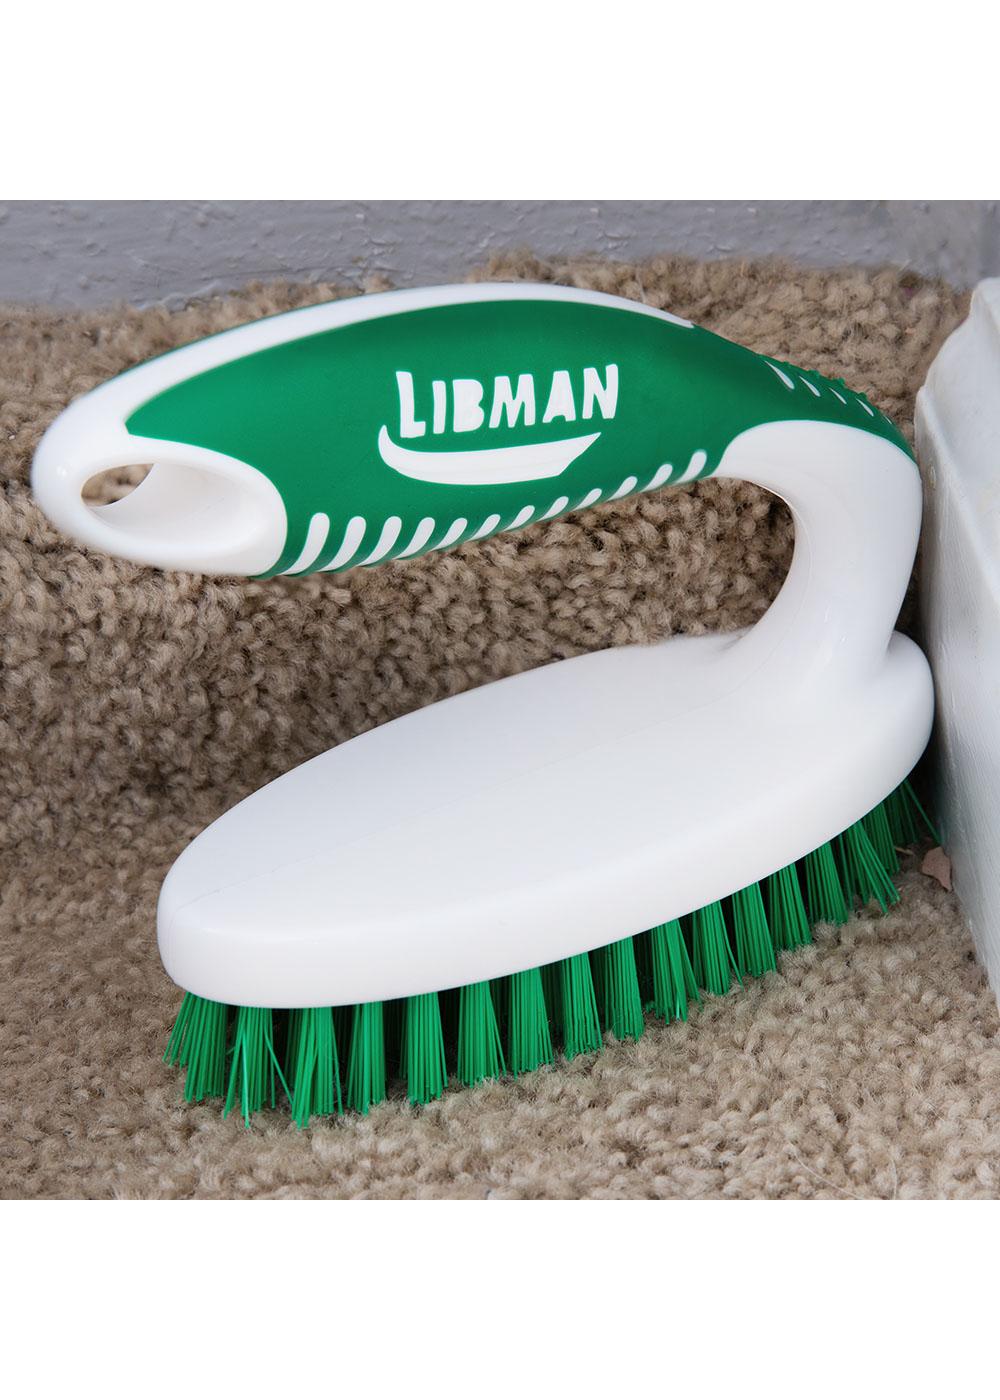 Libman Small Scrub Brush; image 2 of 4